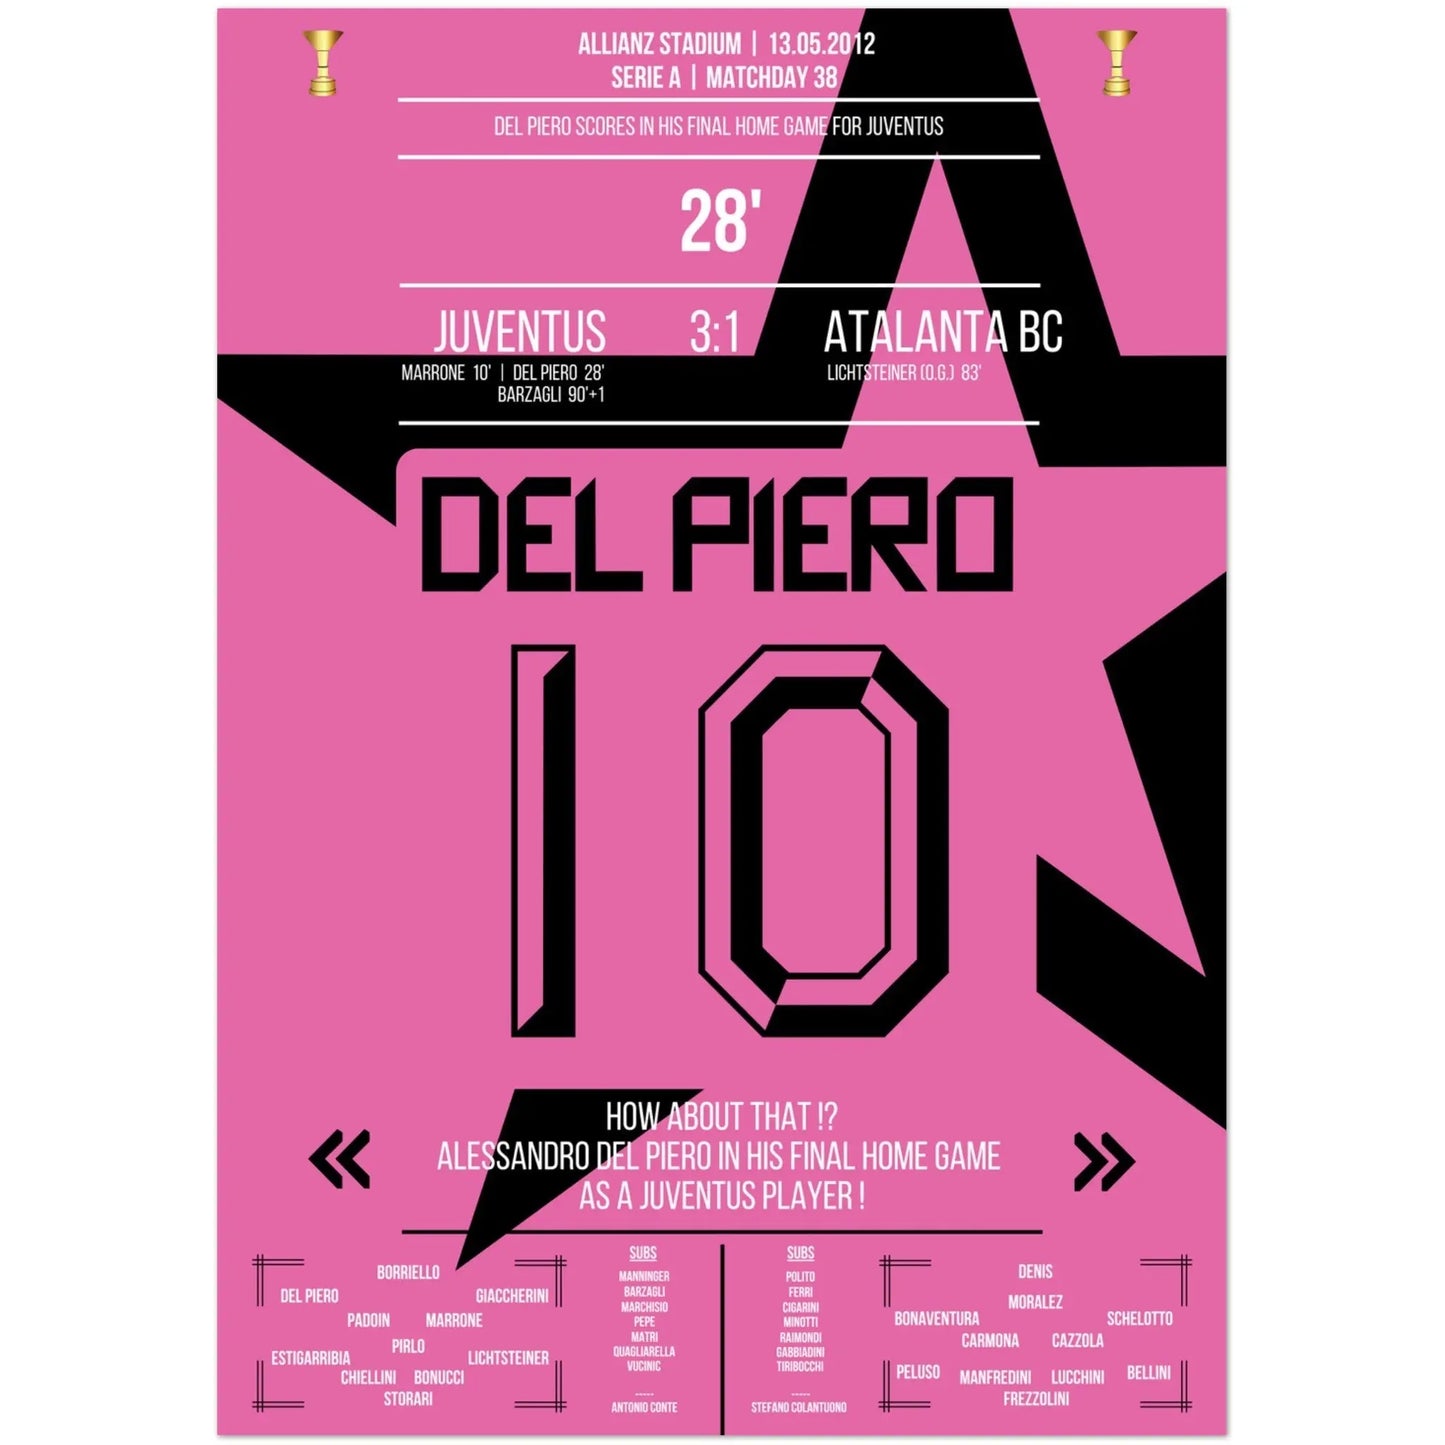 Del Piero's perfect farewell goal against Atalanta in 2011/12